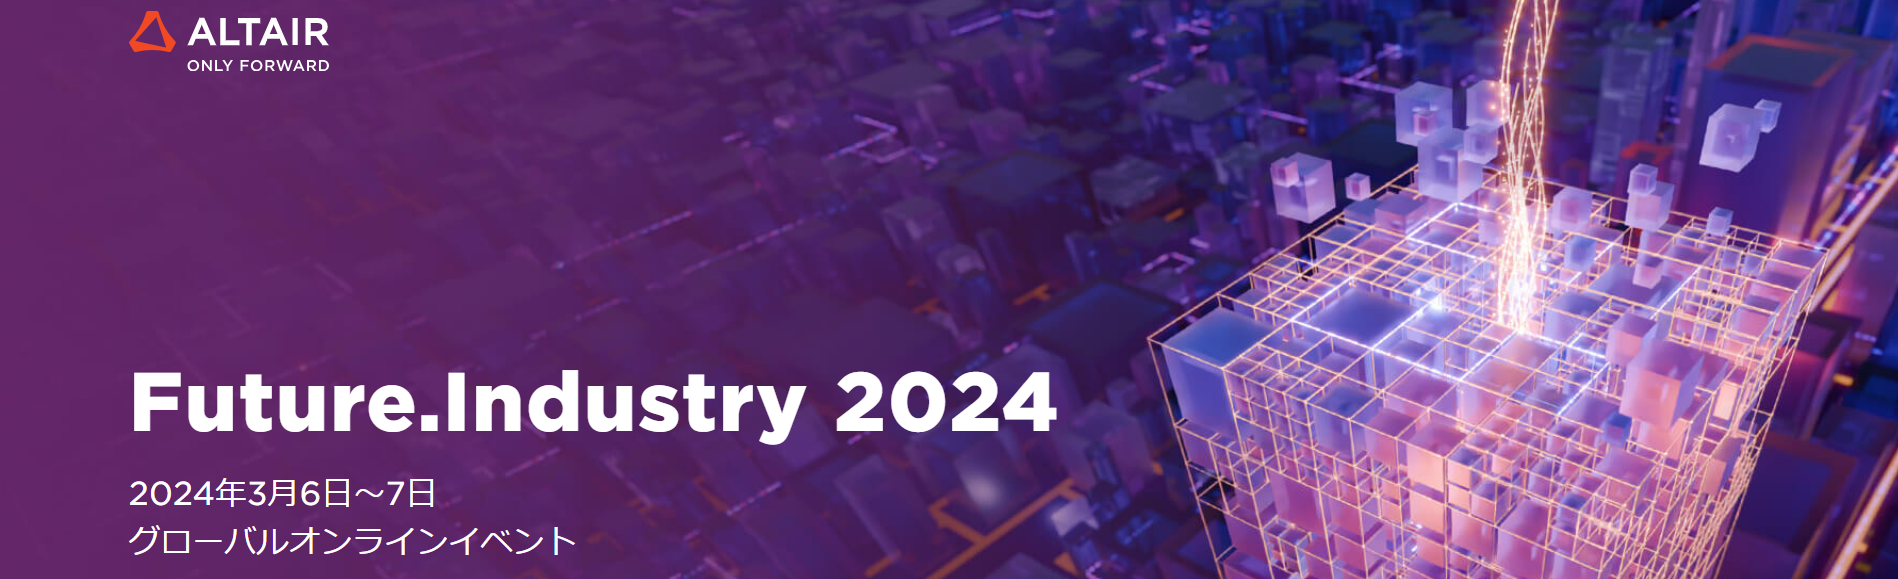 Altair Future.Industry 2024